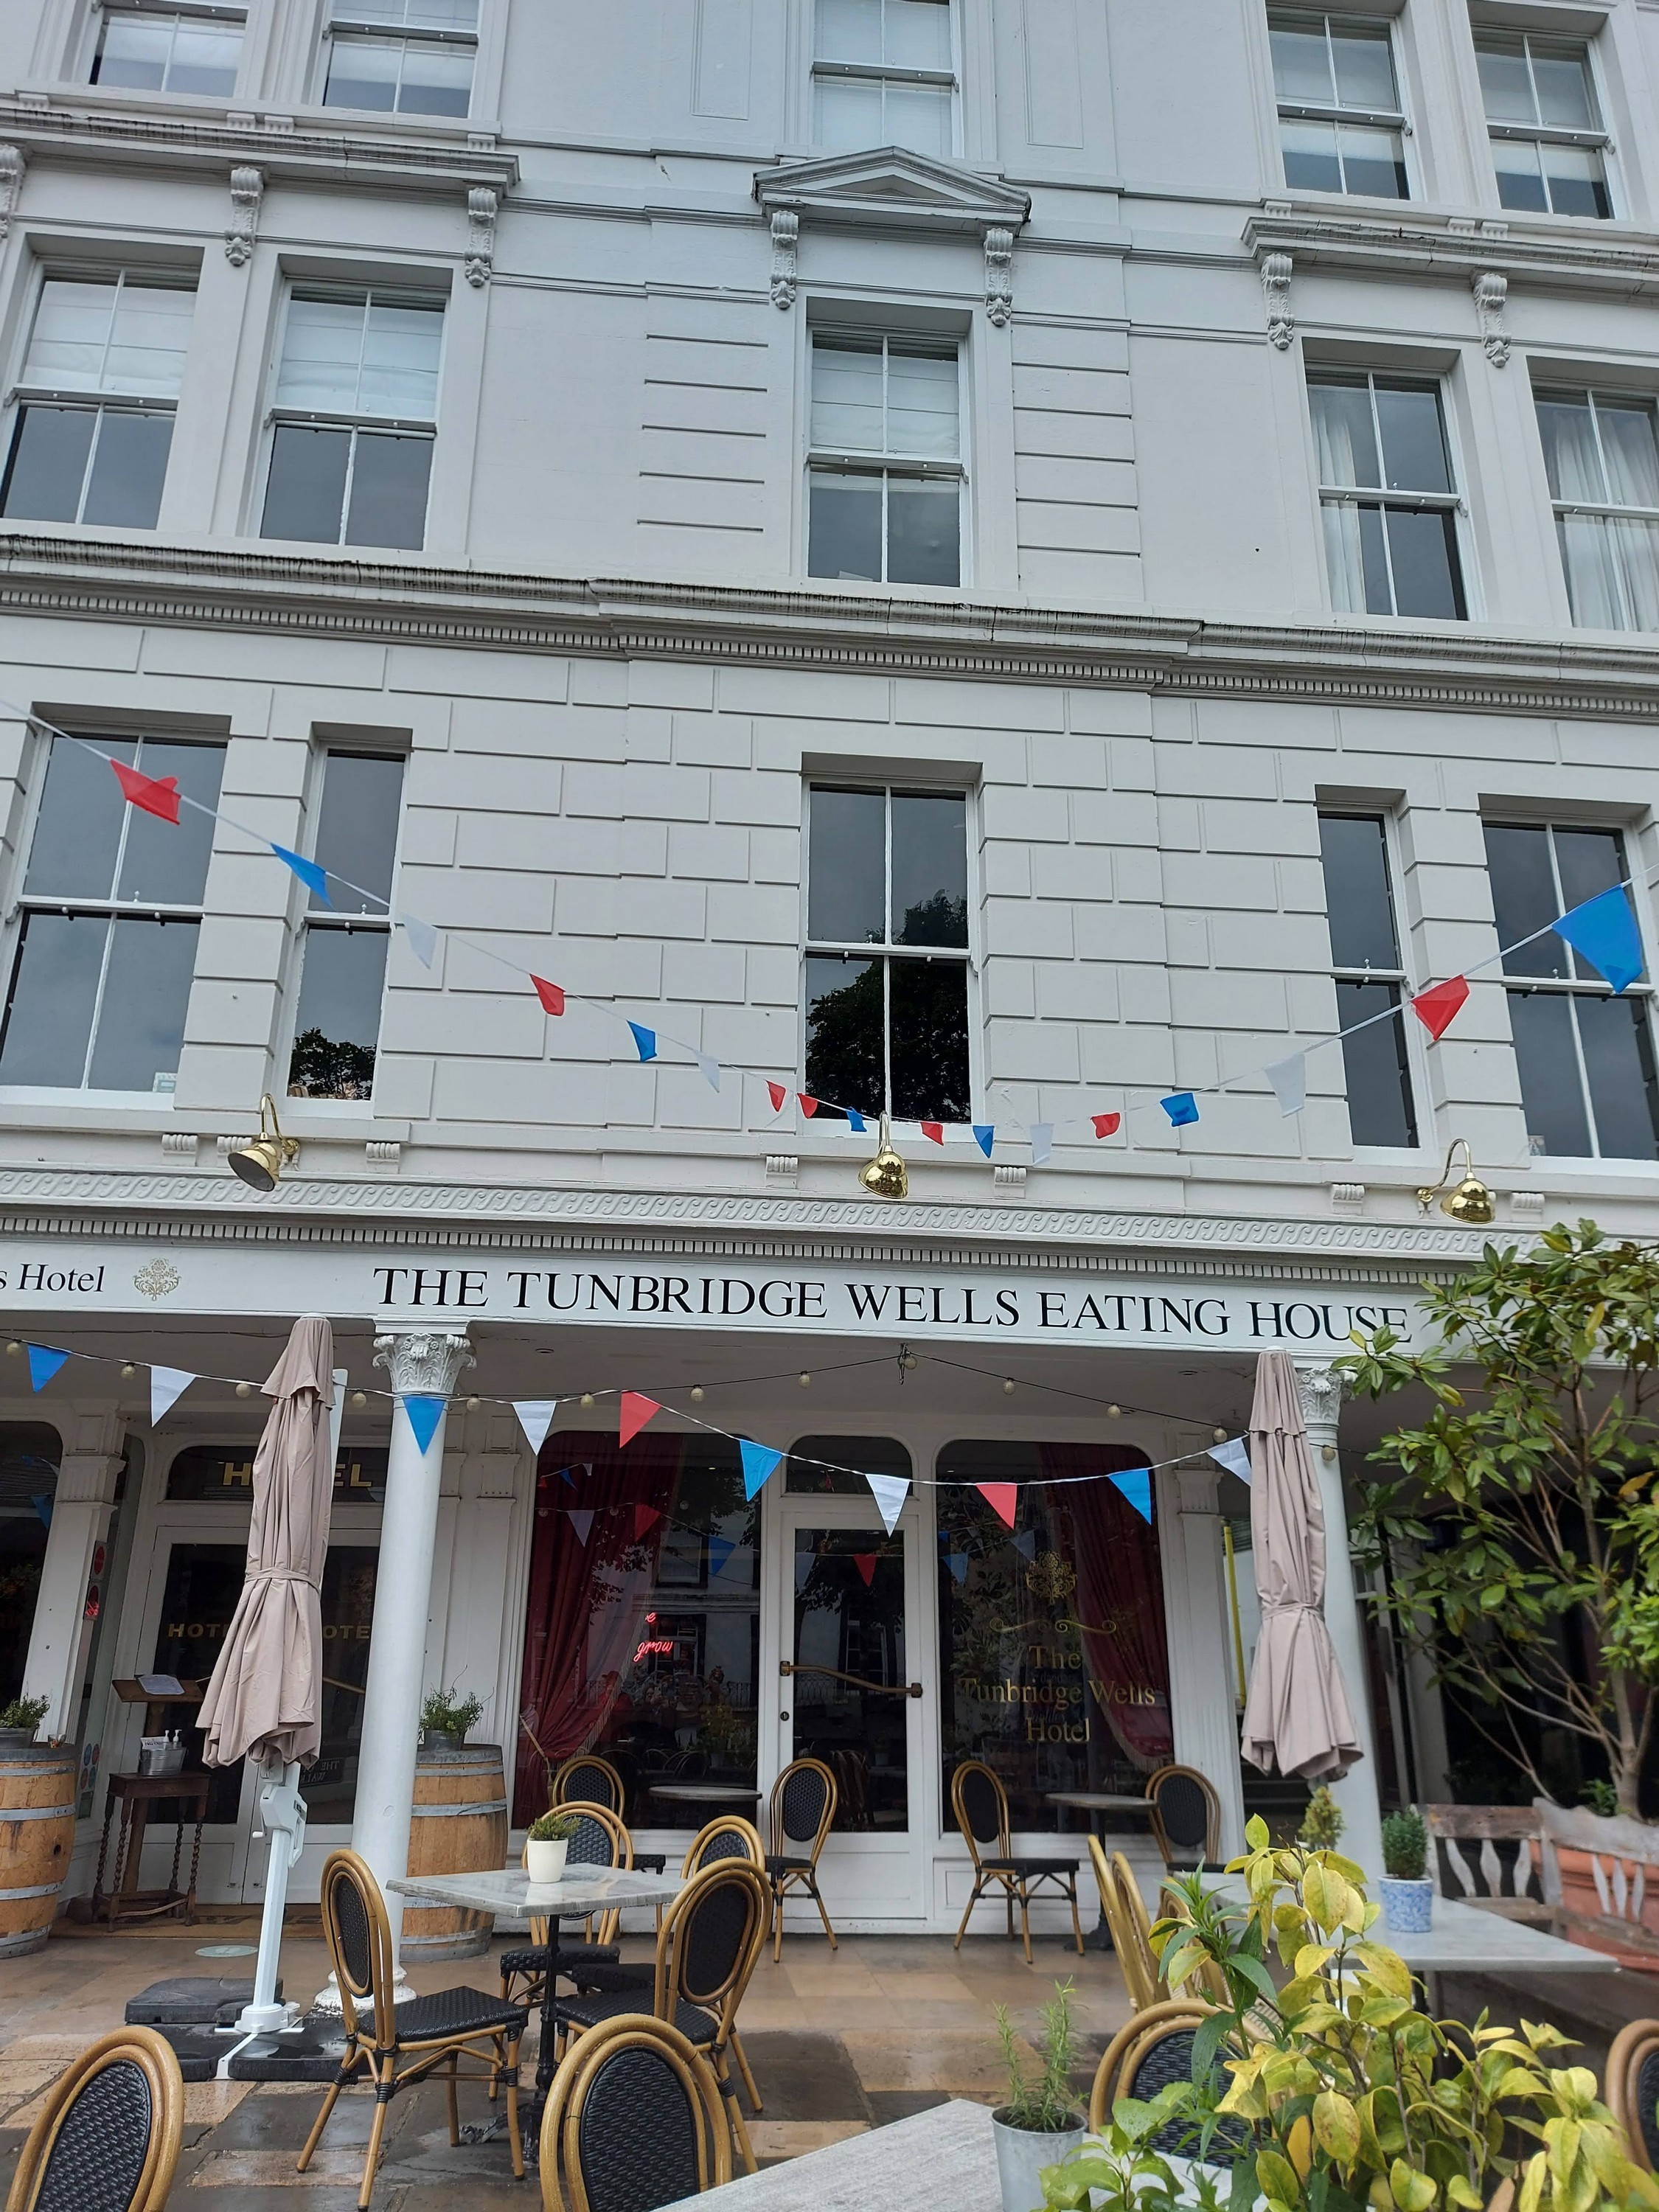 The Tunbridge Wells Eating House